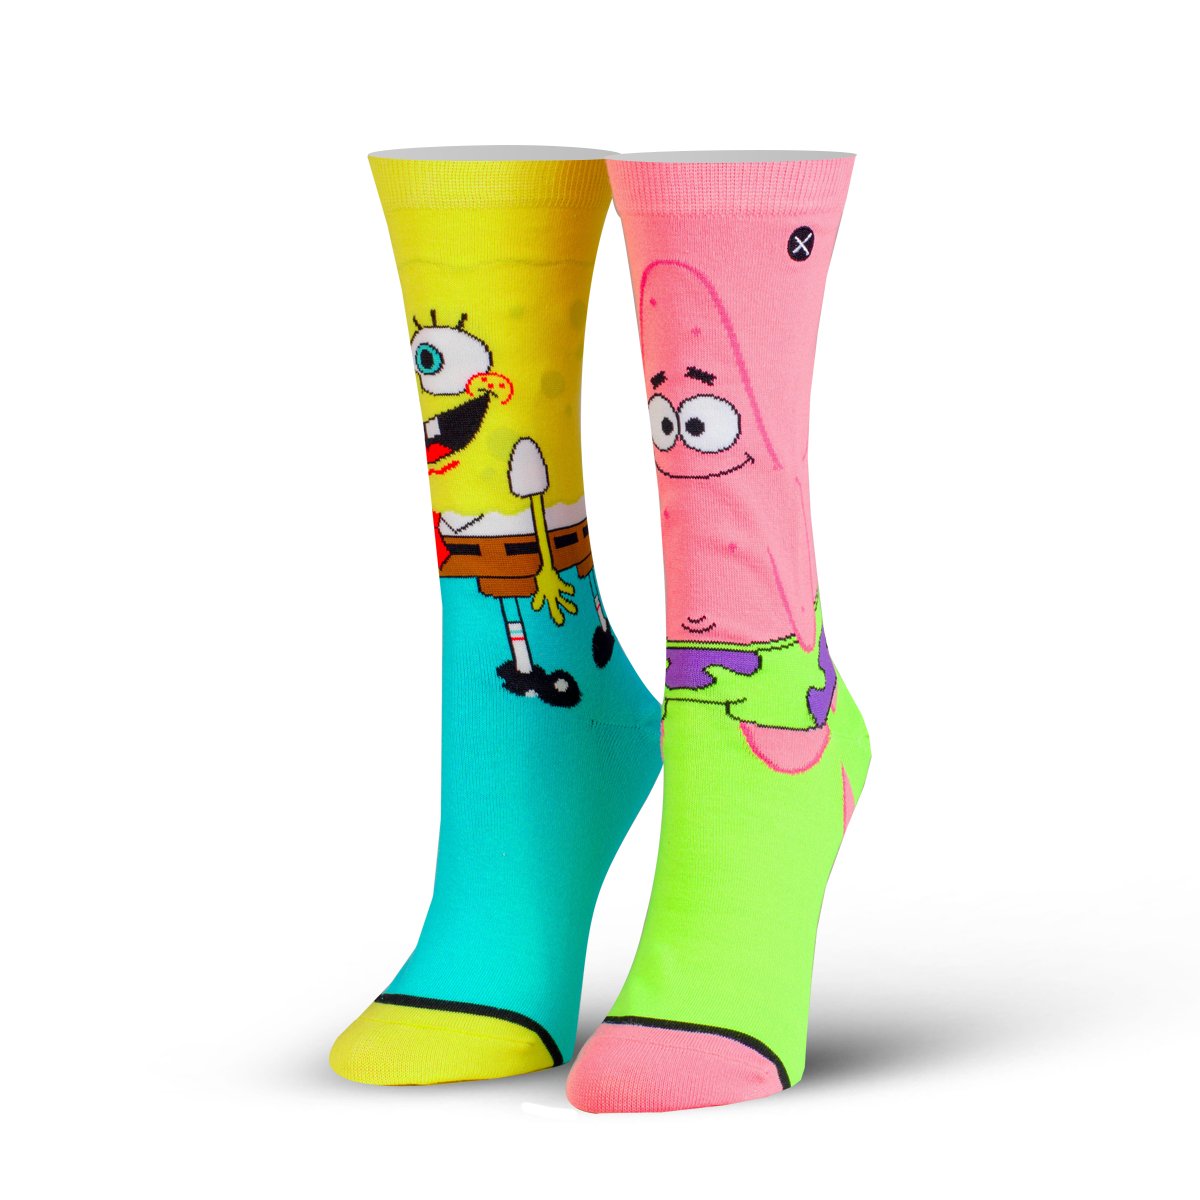 Spongebob & Patrick